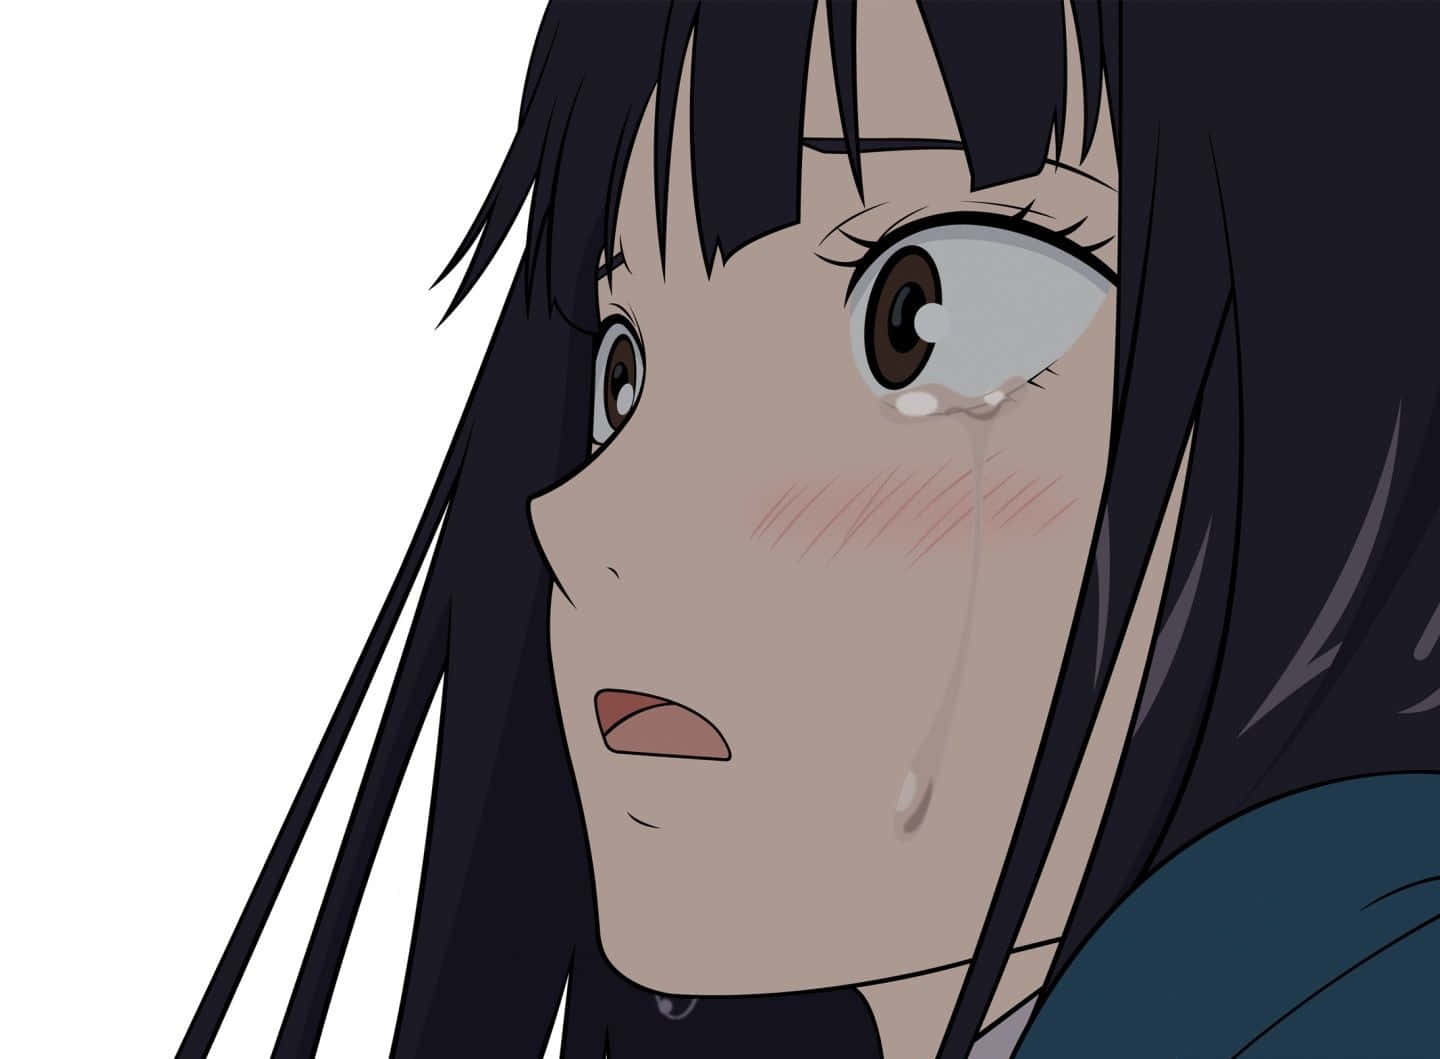 Animedepression Sawako Kuronuma Kan Översättas Till Anime-depression Sawako Kuronuma På Svenska. Detta Kan Användas Som Namnet På En Dator- Eller Mobilbakgrundsbild Som Visar En Bild Av Karaktären Sawako Kuronuma Från Anime-serien 